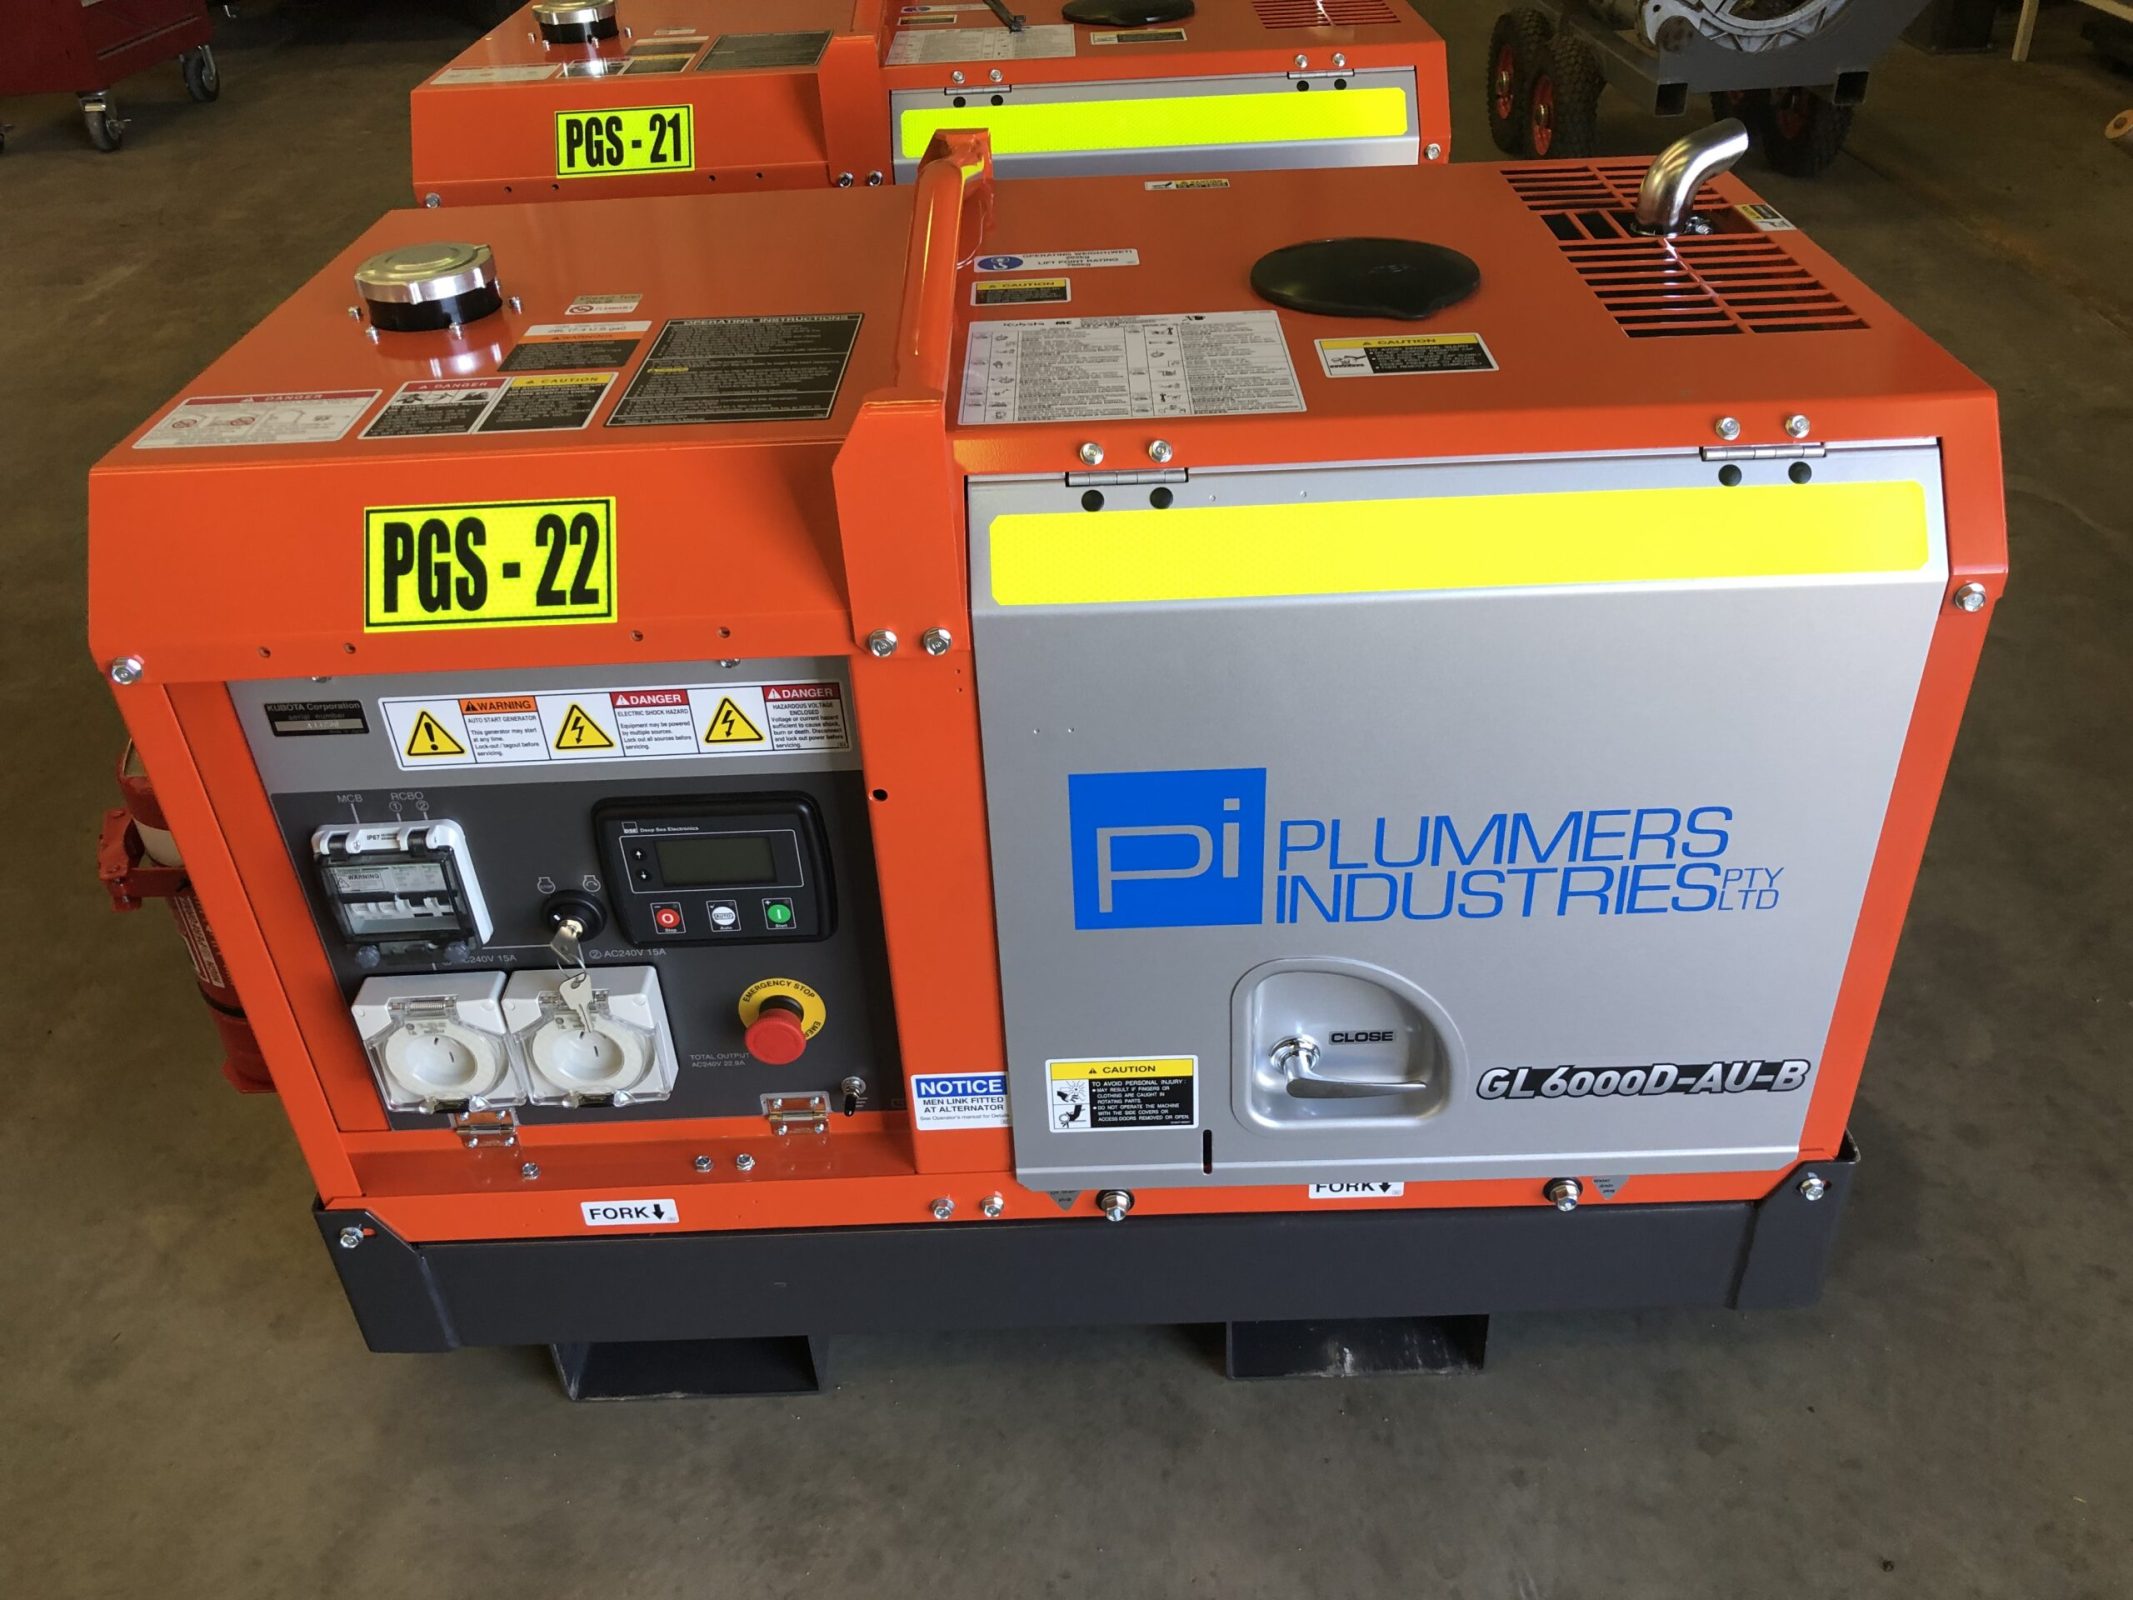 Plumbers industries showcasing portable generators and pipeline equipment.